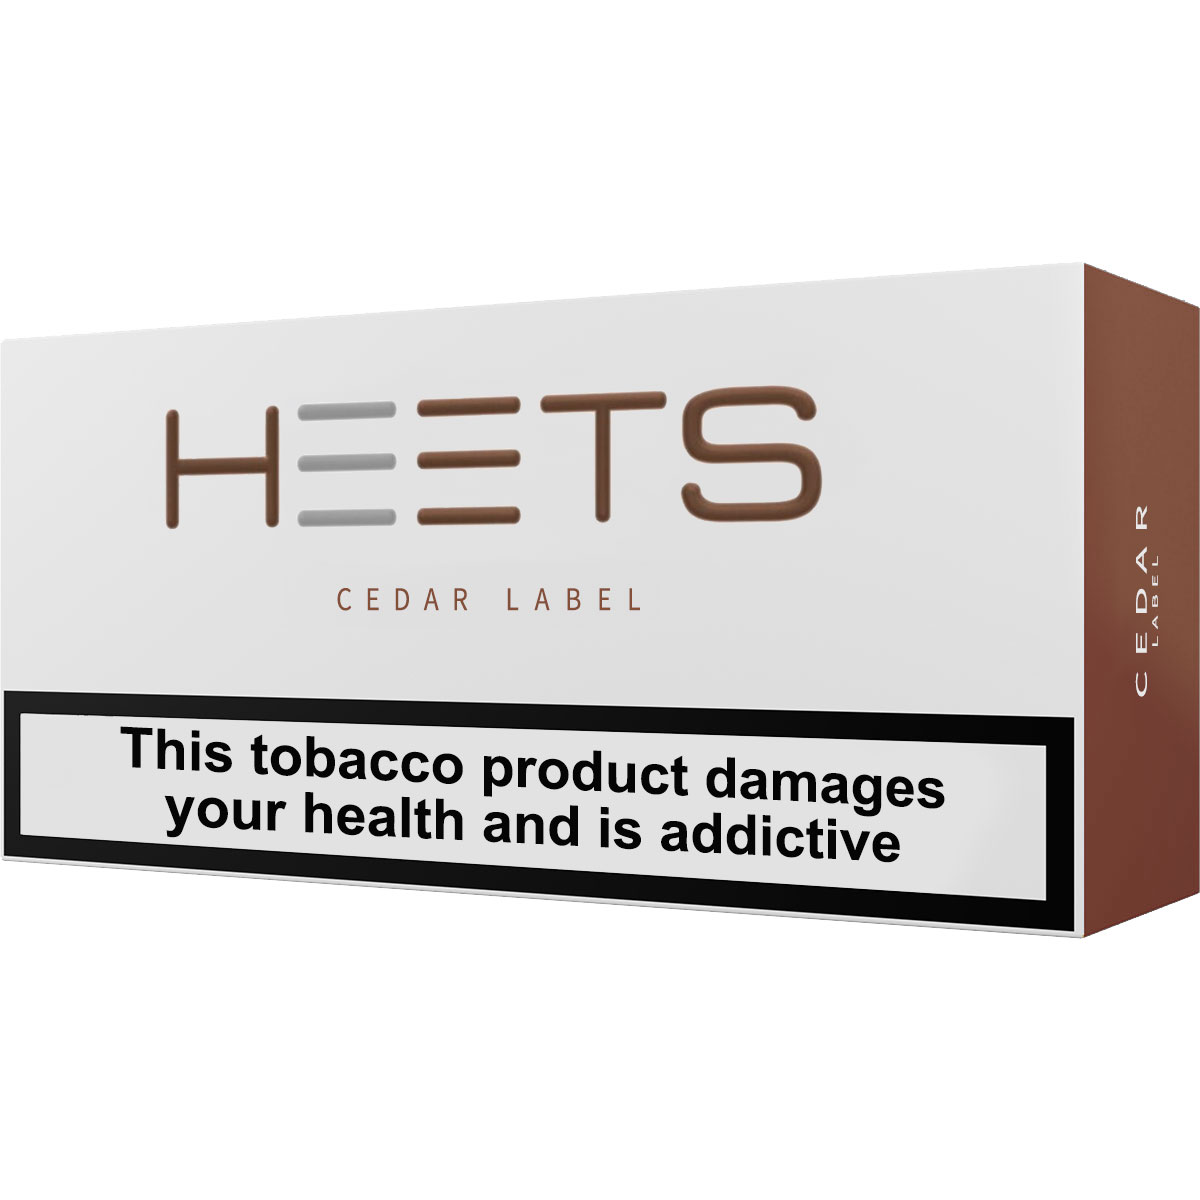 Heets - Cedar Label